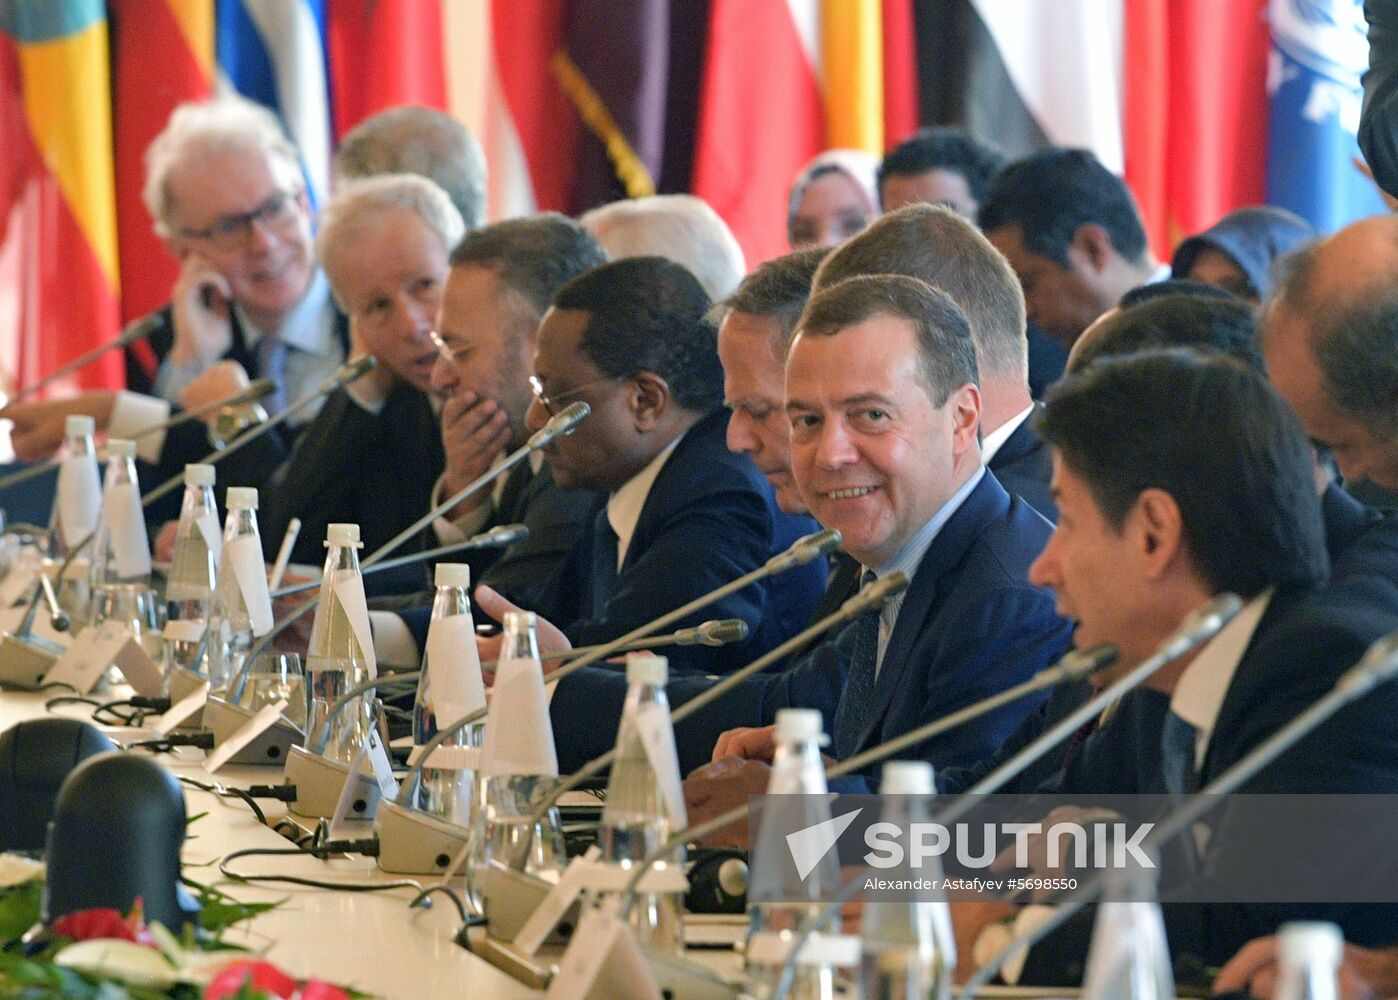 Prime Minister Dmitry Medvedev's visit to Italy